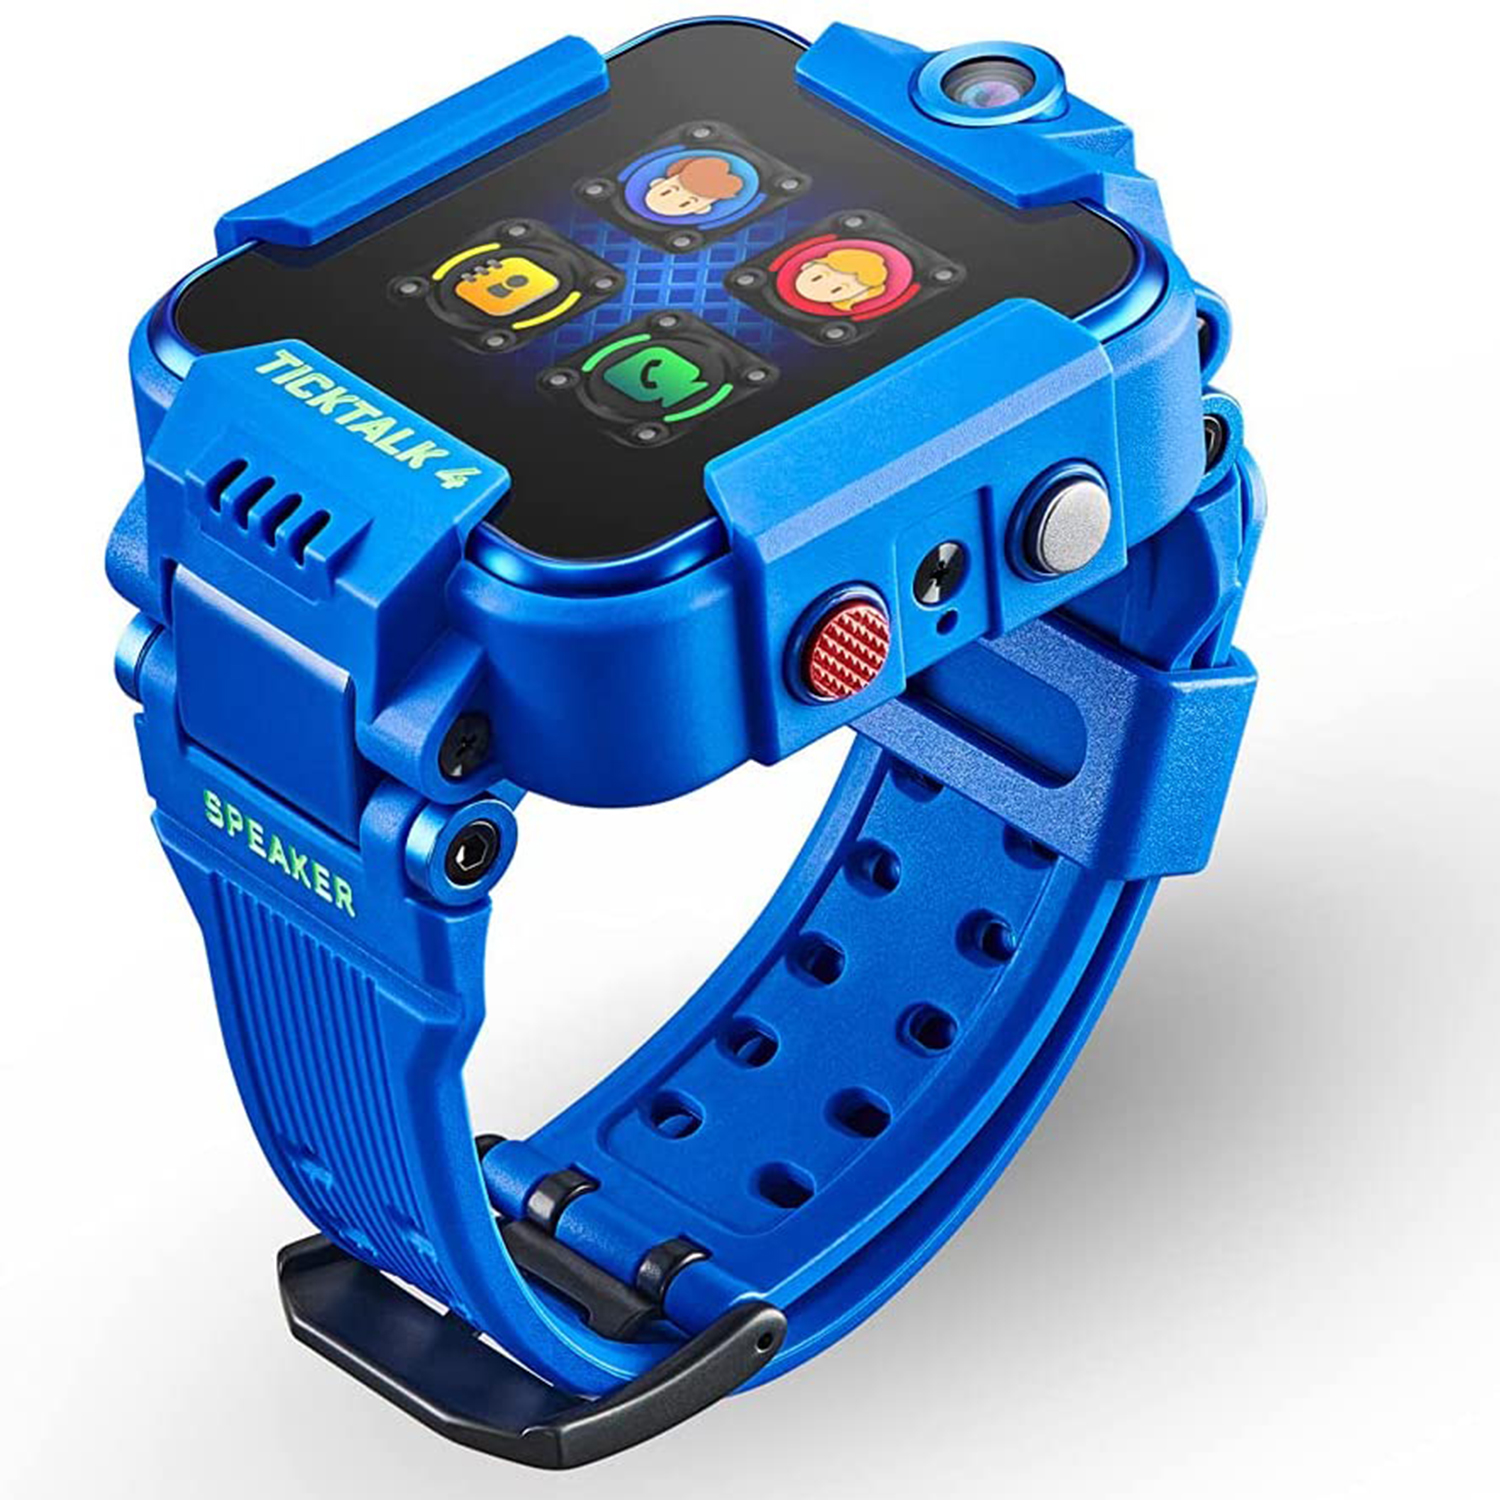 Most Durable Smartwatch for Kids: TickTalk 4 